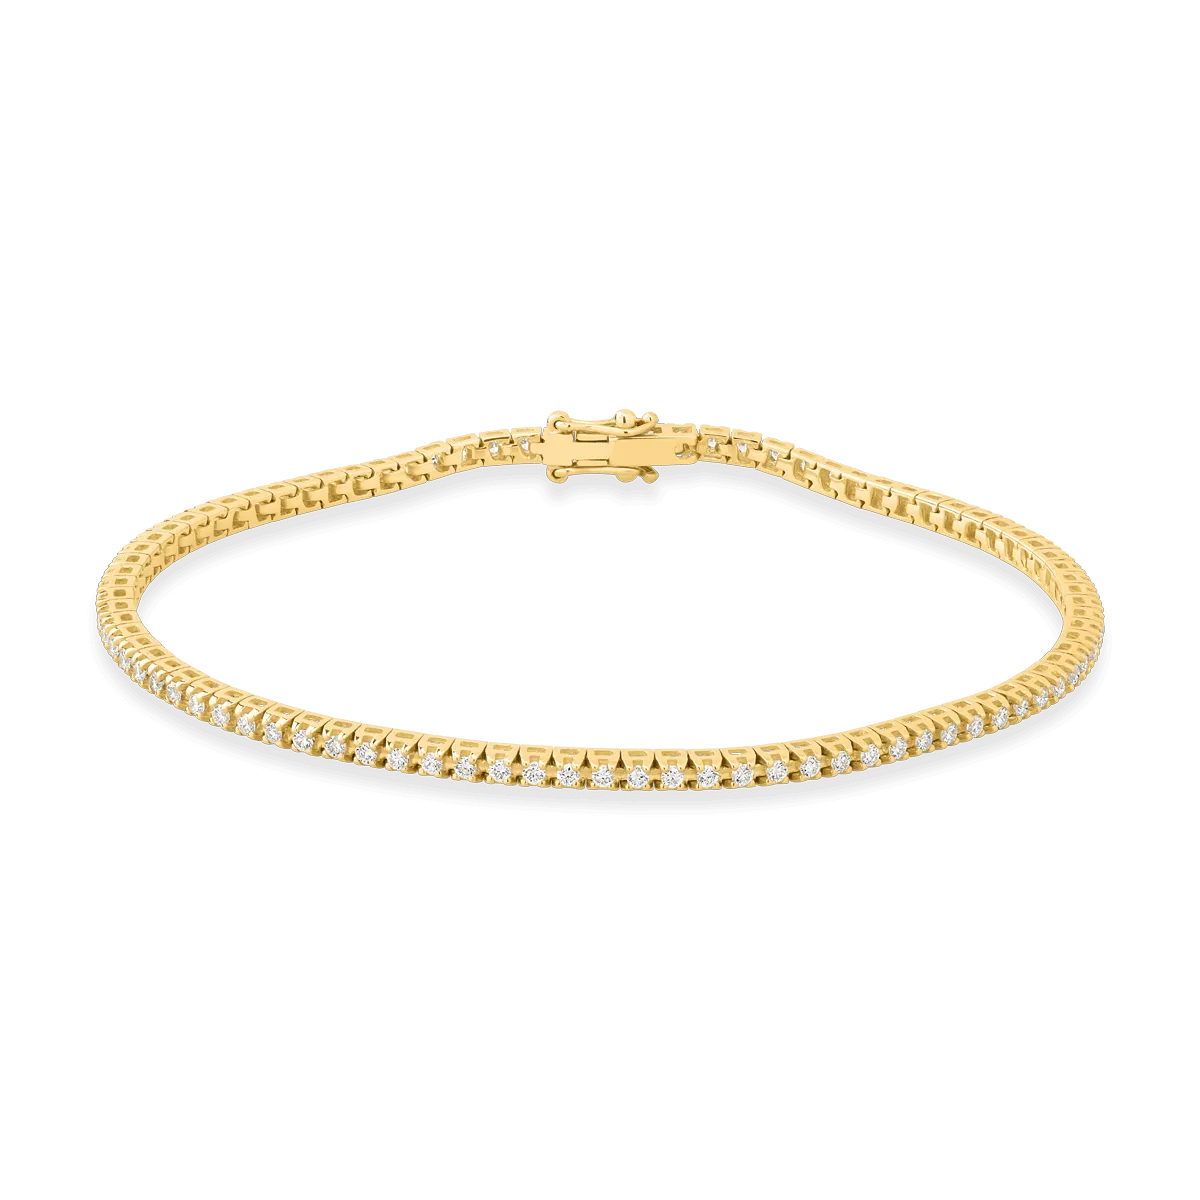 18K yellow gold tennis bracelet with 1ct diamonds